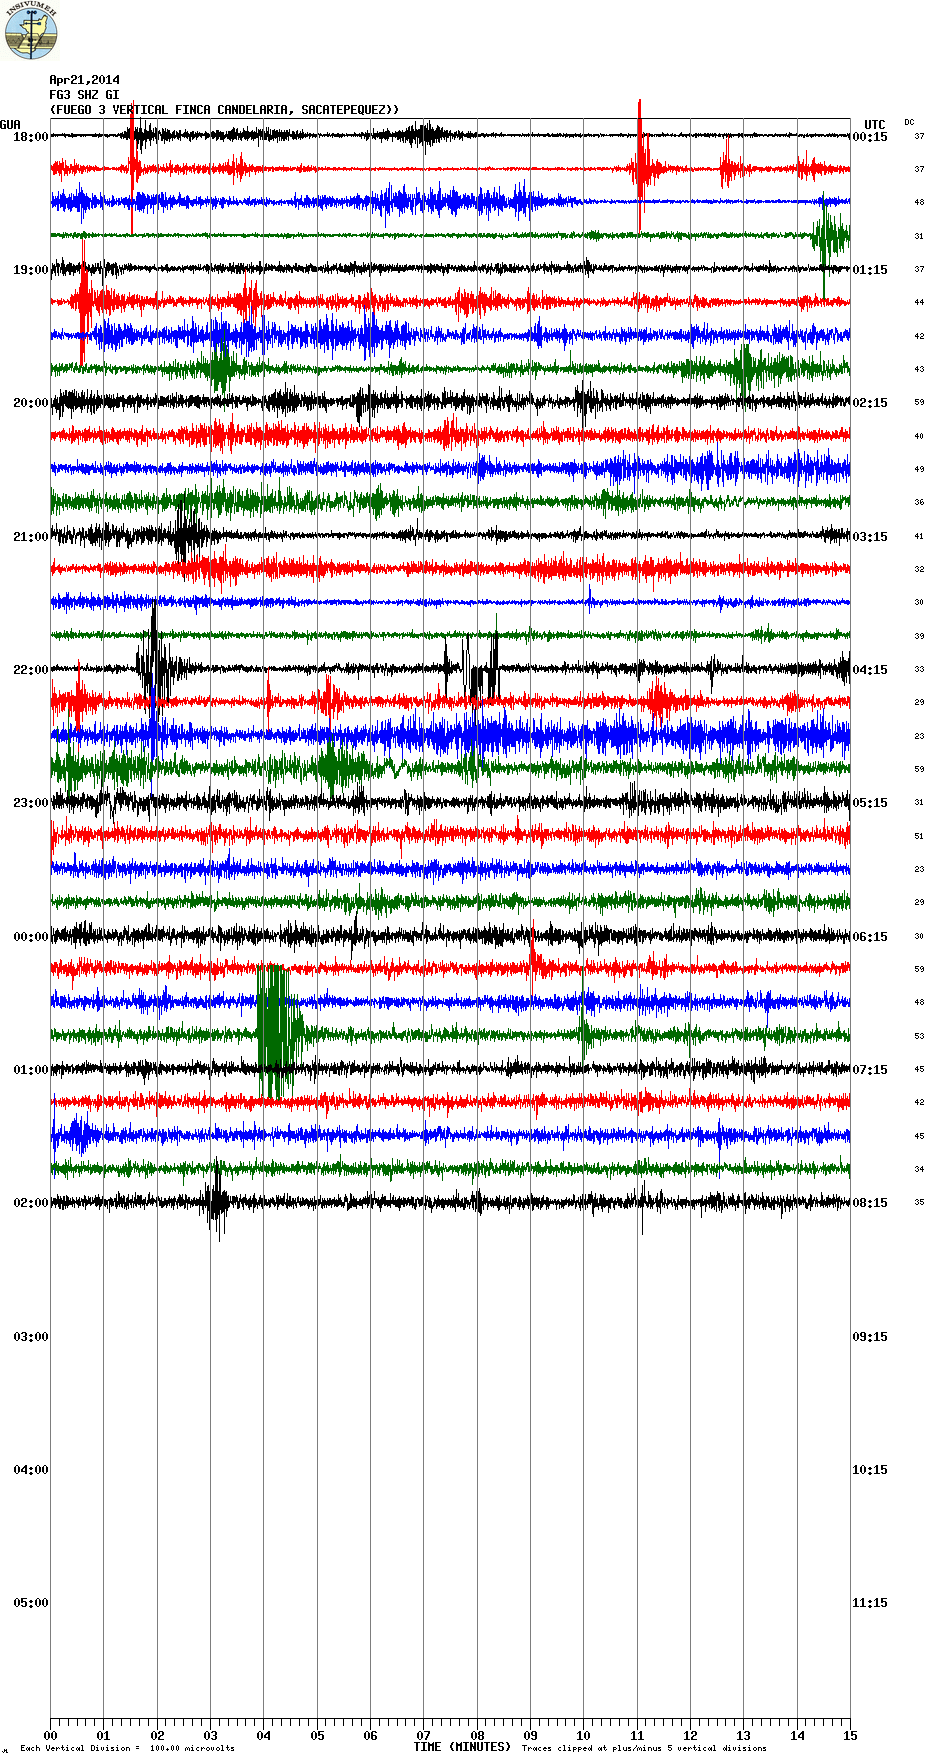 Current seismic signal